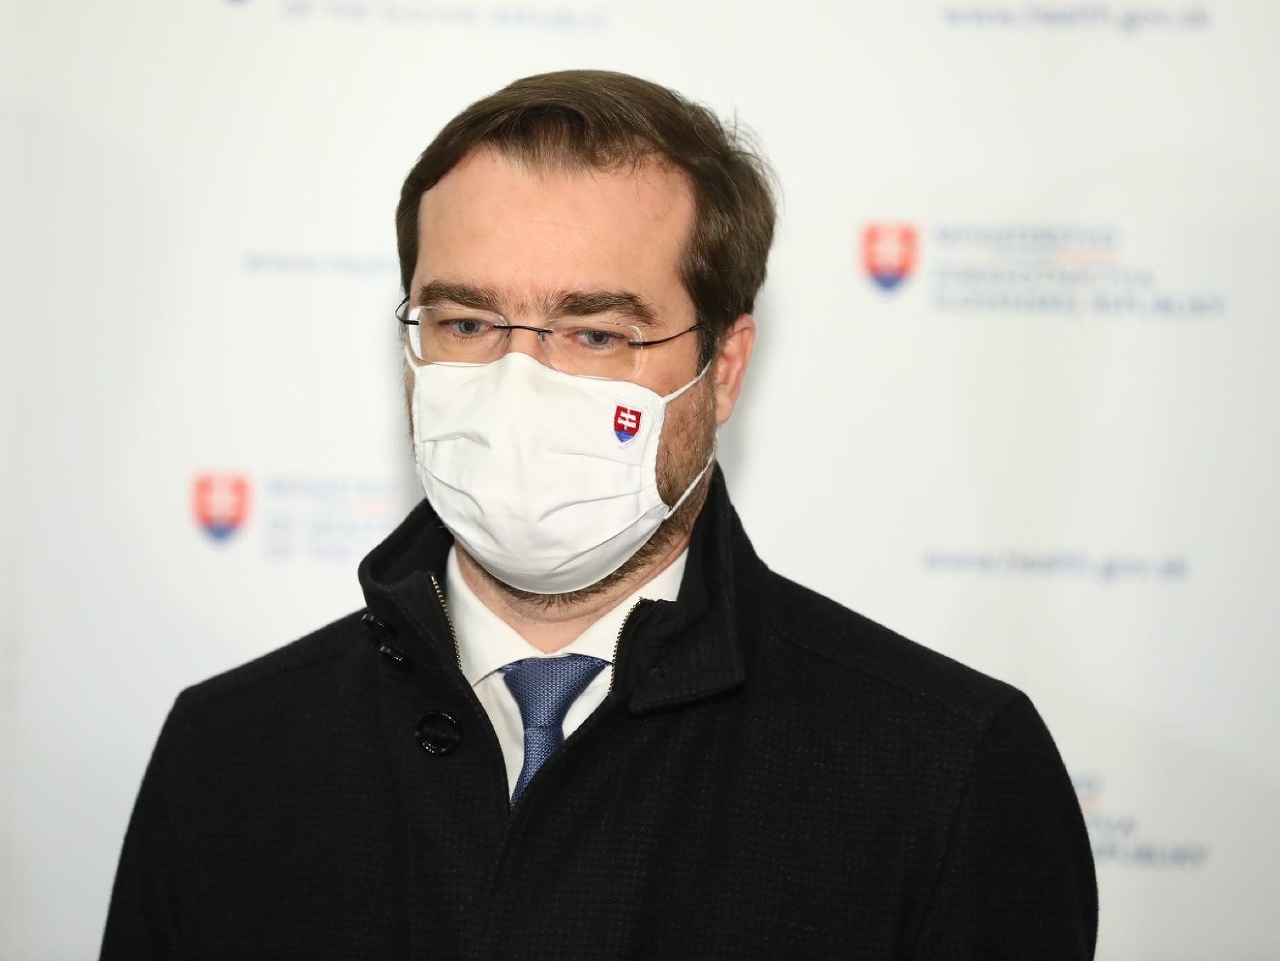 Minister zdravotníctva Marek Krajčí